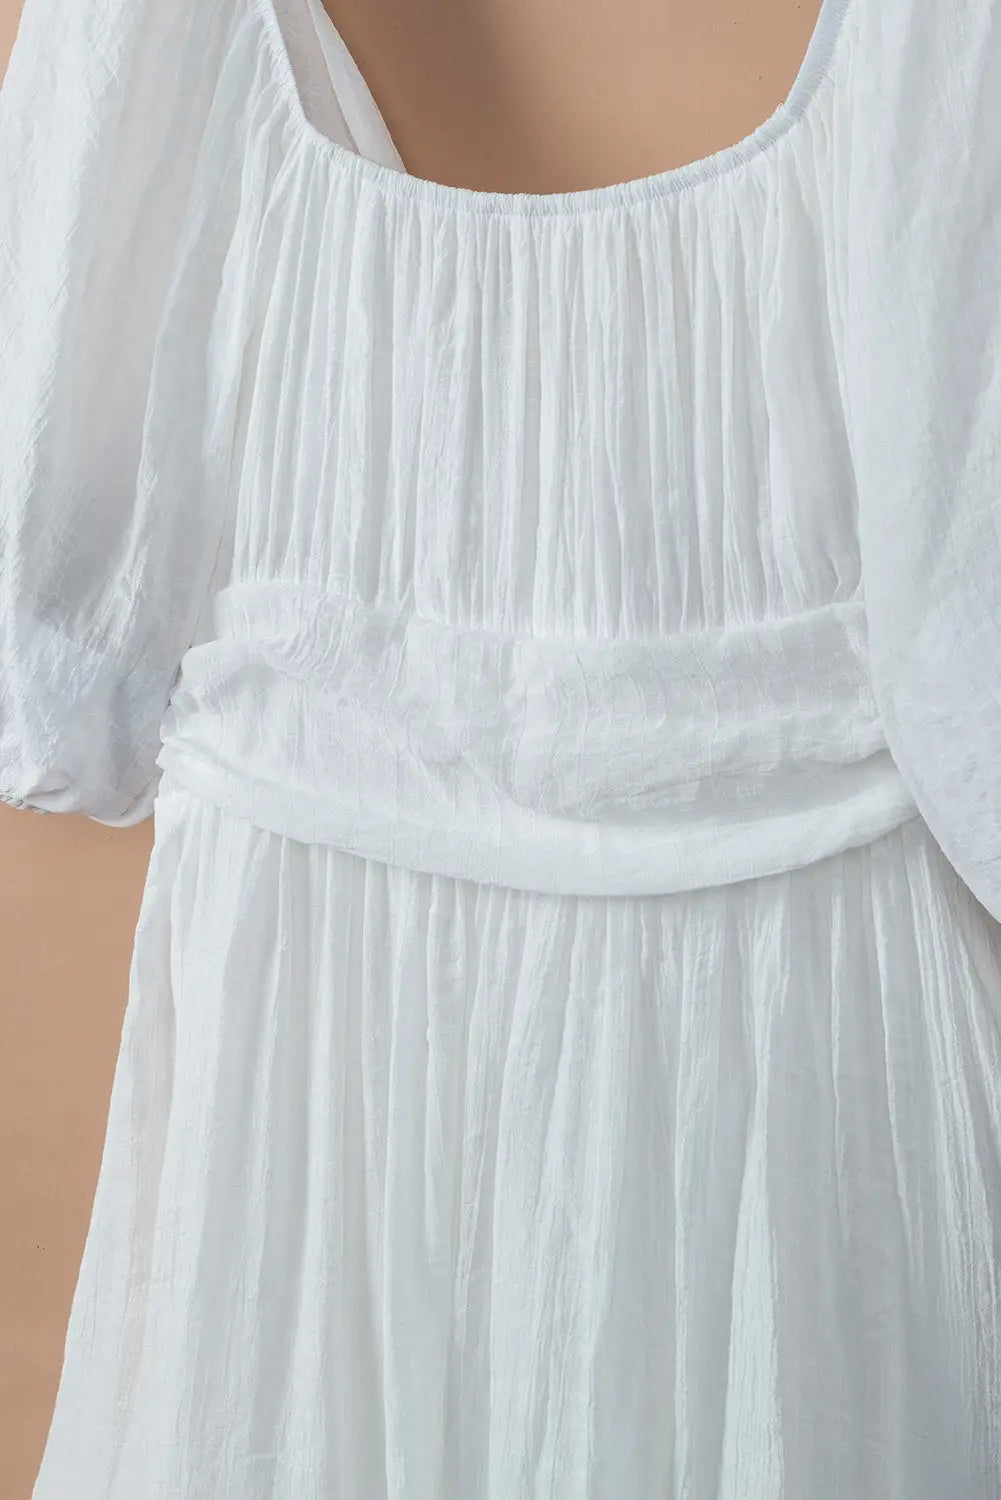 White bow knot square neck ruffled high waist mini dress - dresses